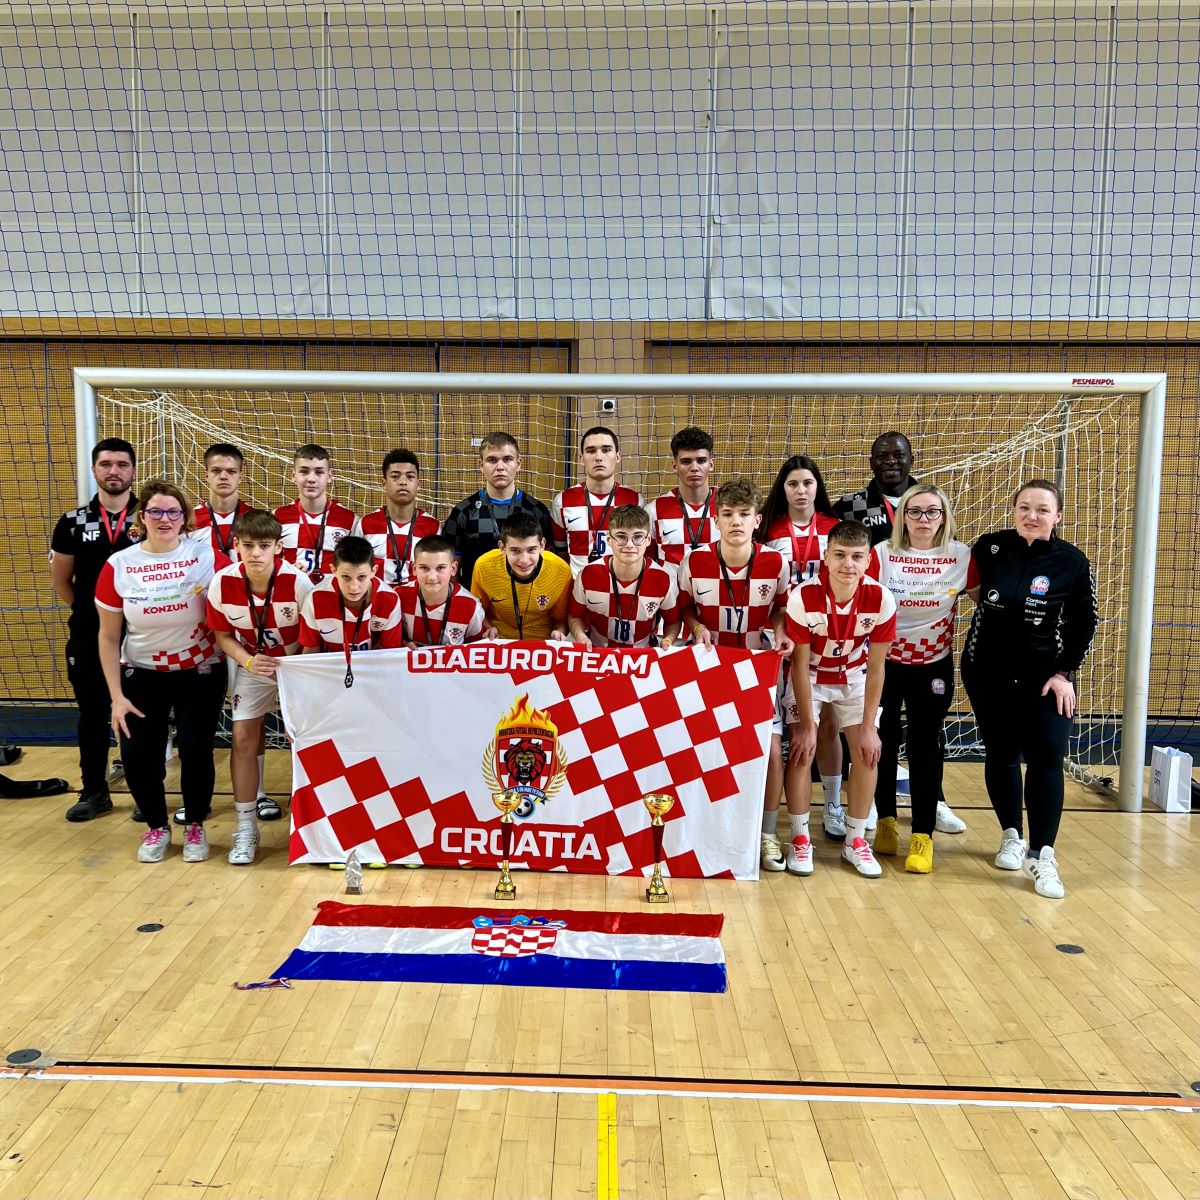 Hrvatska DiaEuro juniorska ekipa osvojila dvije medalje na Europskom futsal turniru osoba s dijabetesom